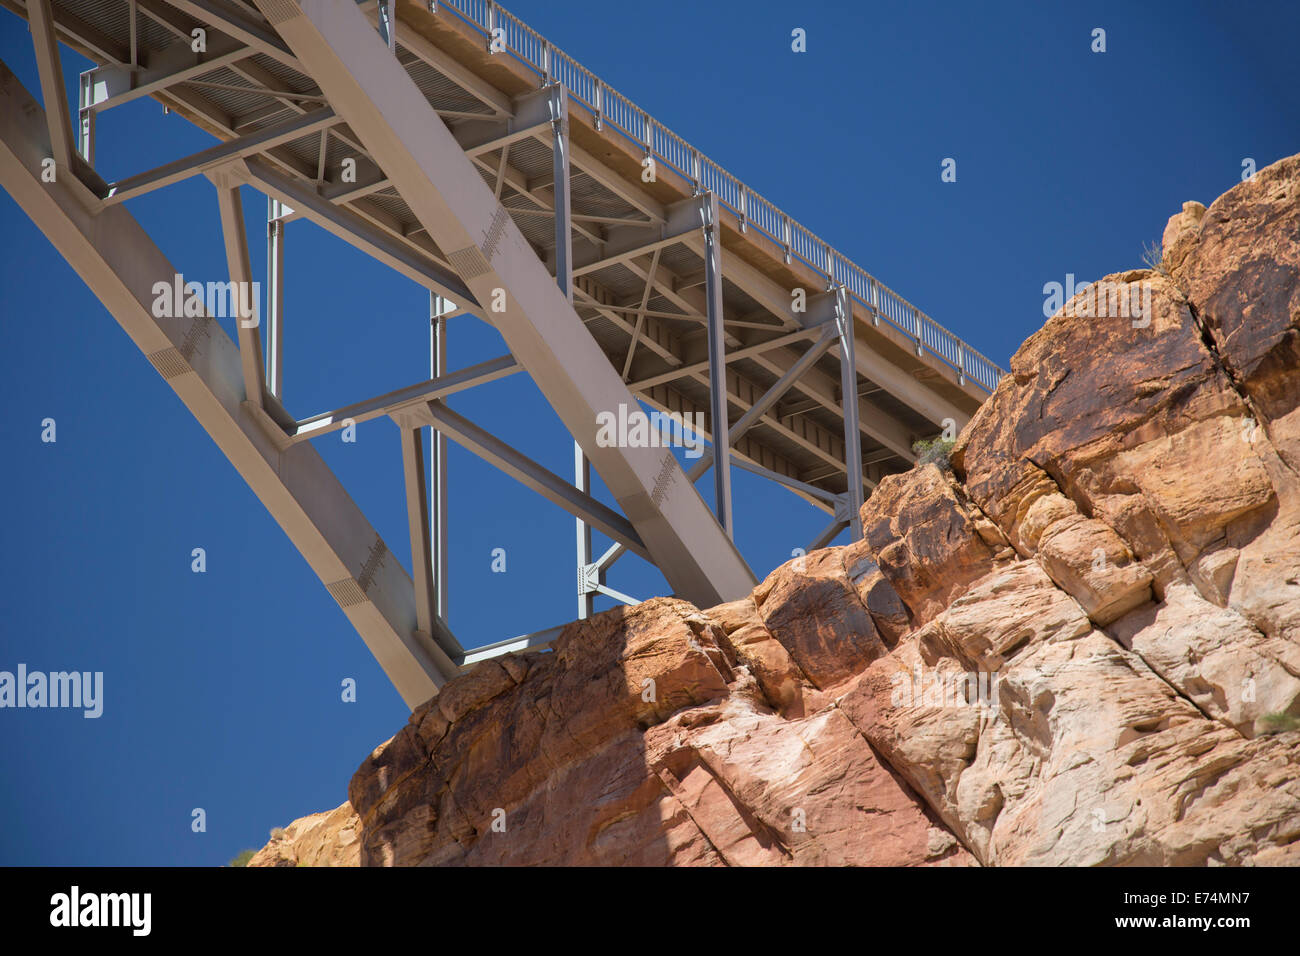 Glen Canyon National Recreation Area, Utah - The bridge over the Colorado River/Lake Powell at Hite, Utah. Stock Photo